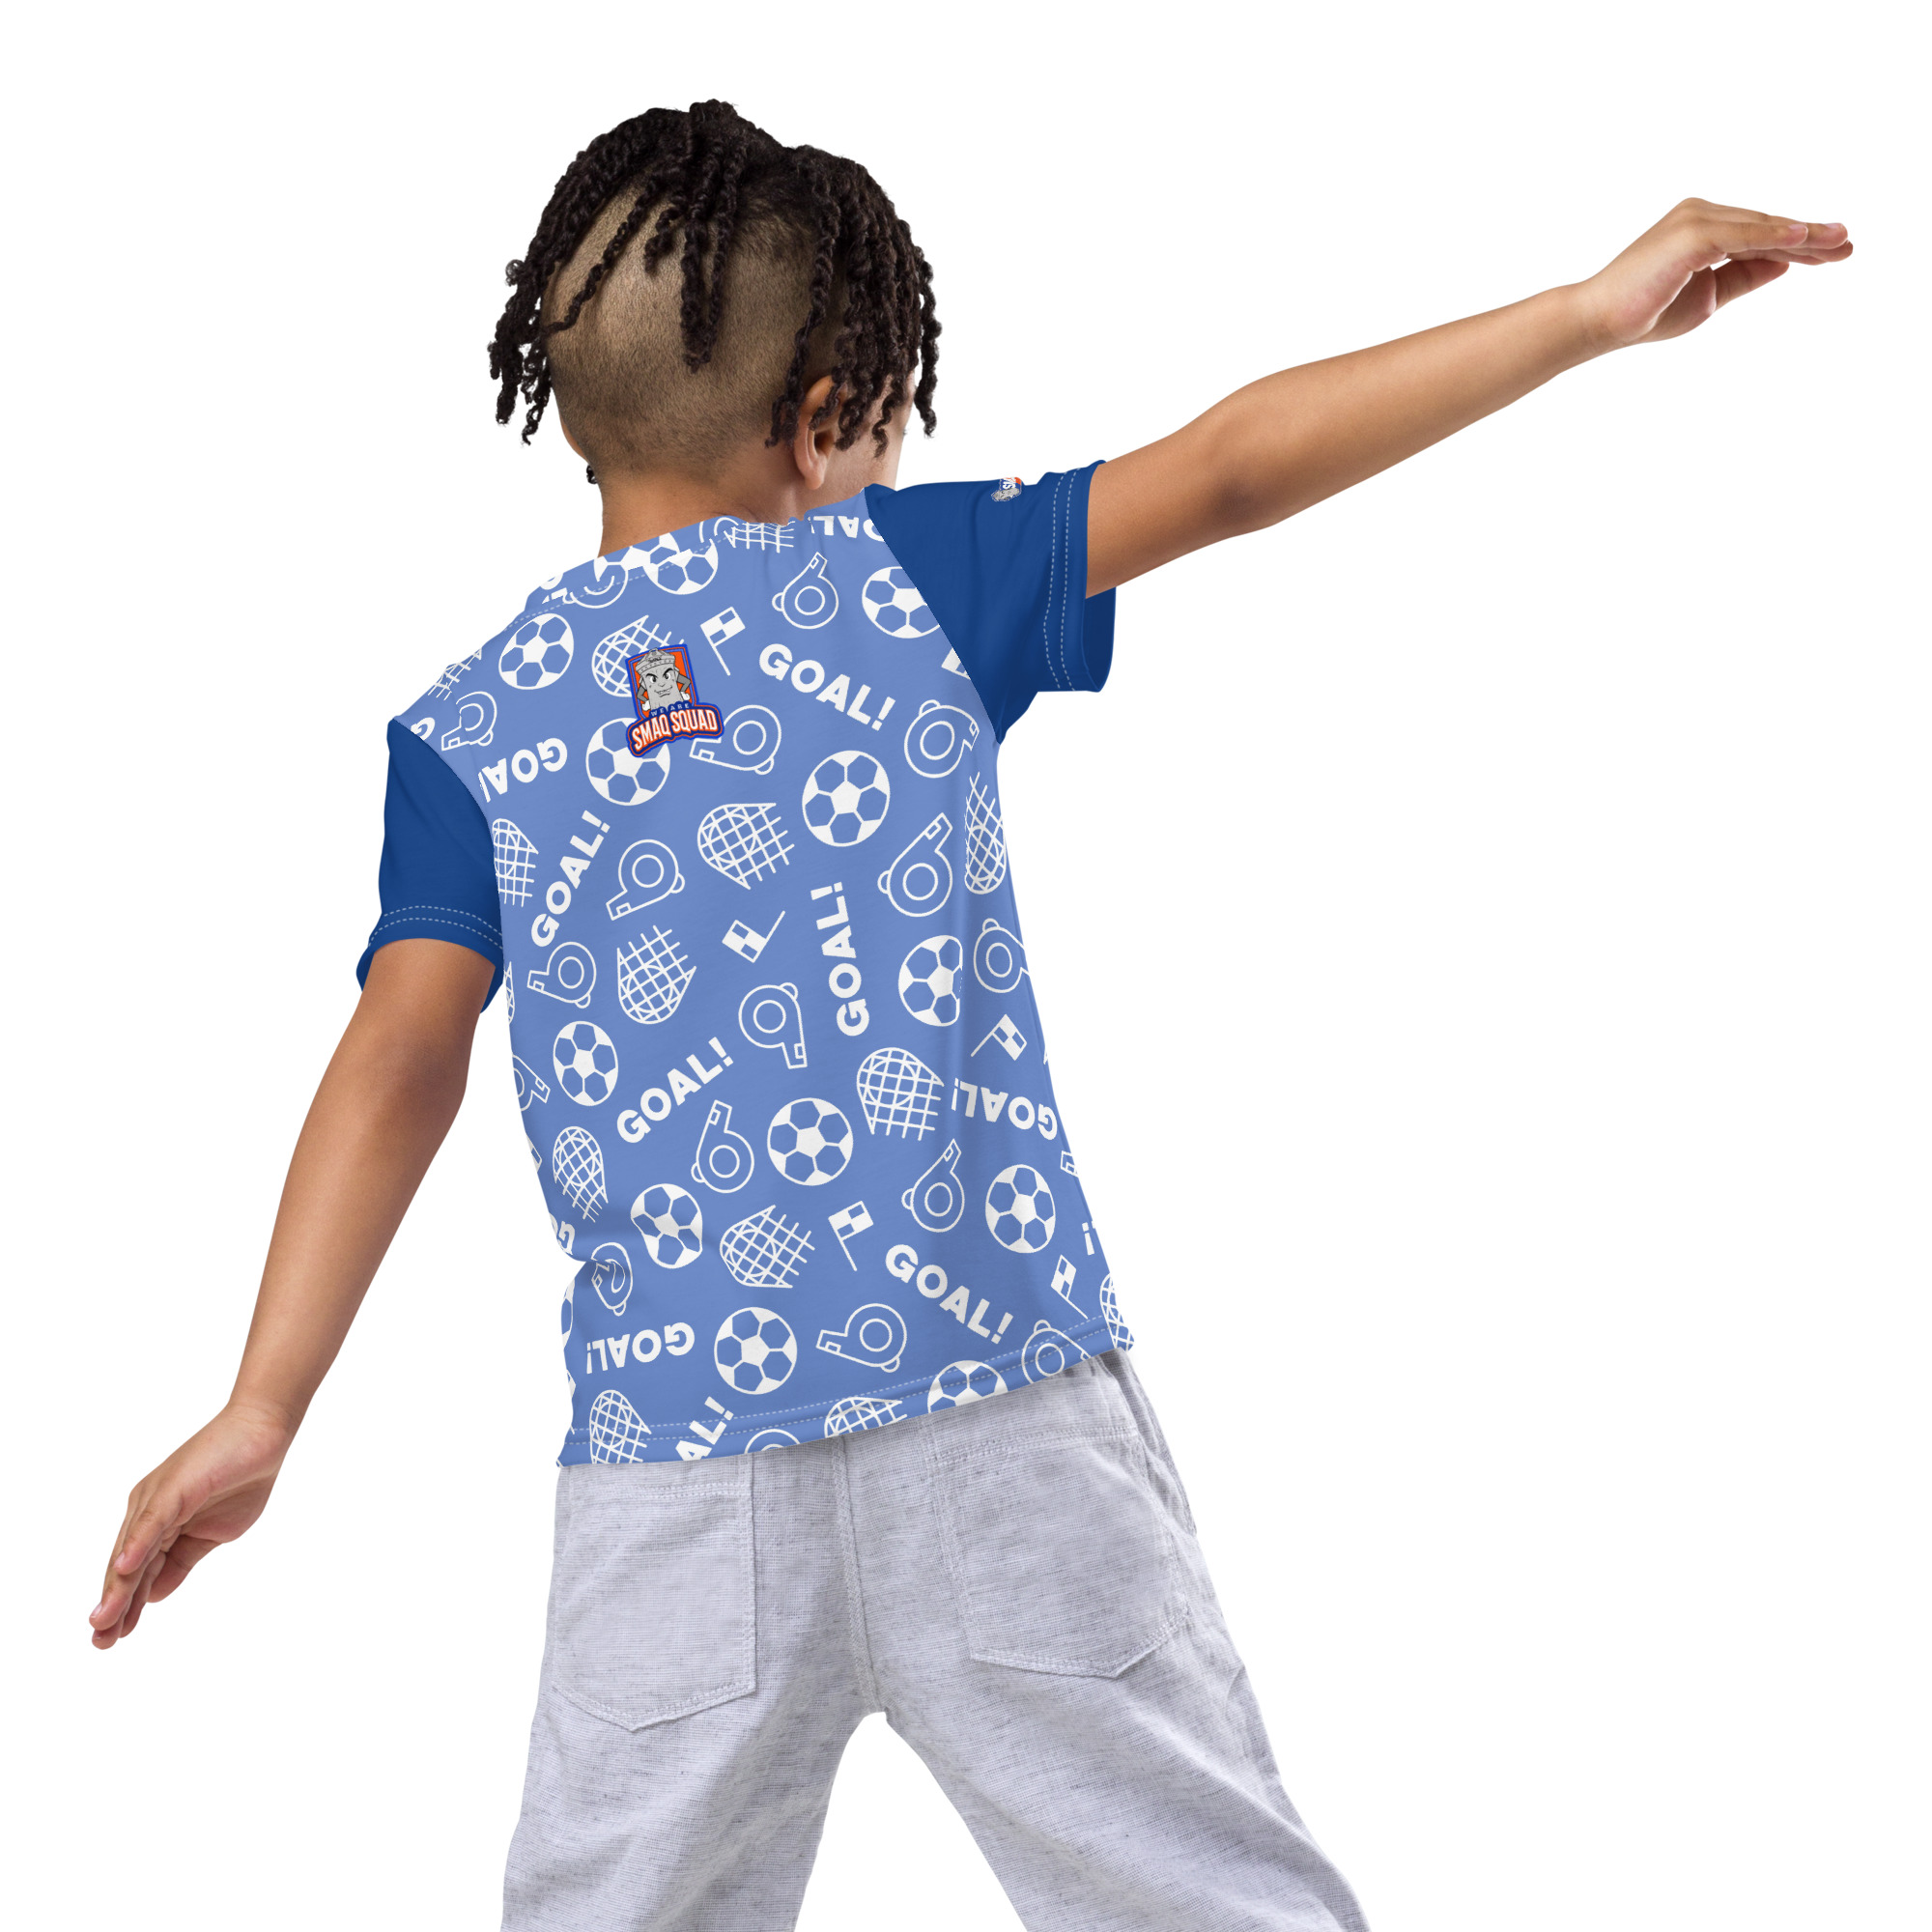 SMAQ SQUAD Goal Kids crew neck t-shirt